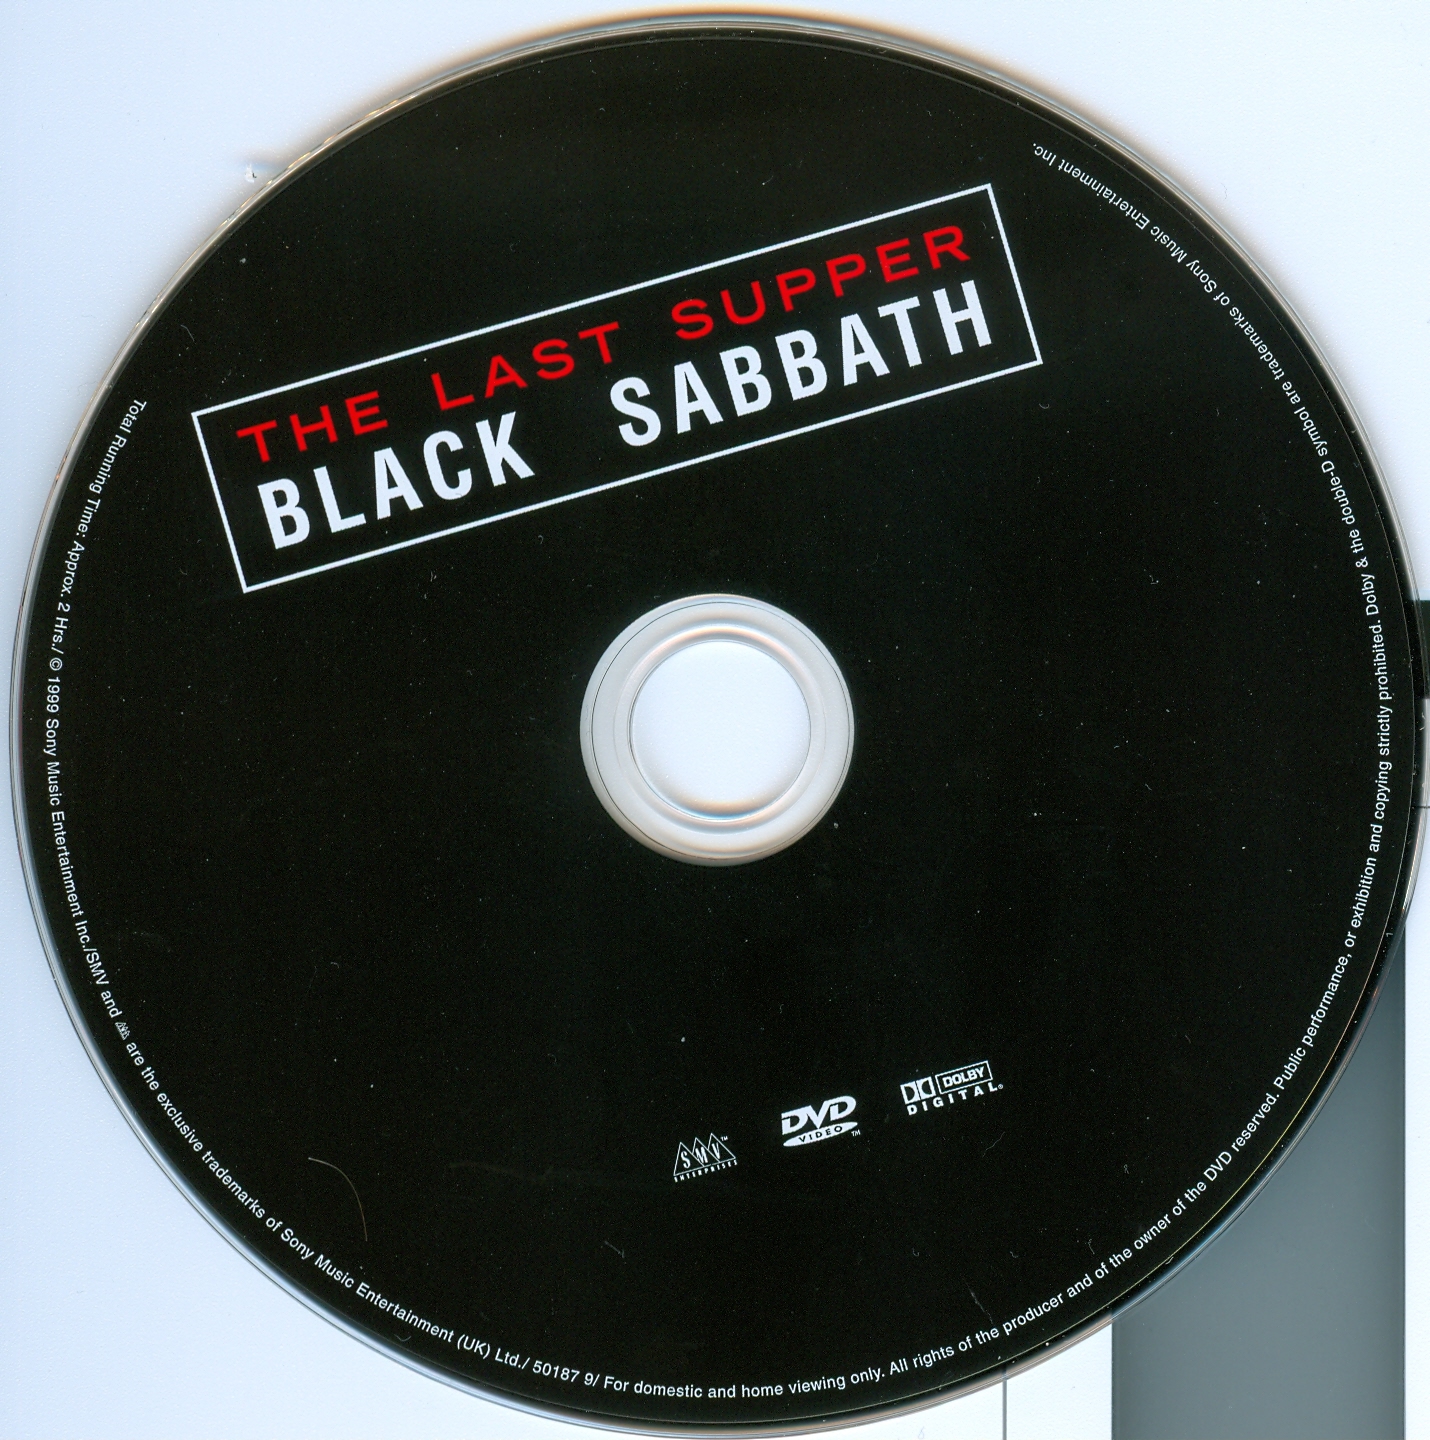 Black Sabbath - The last supper